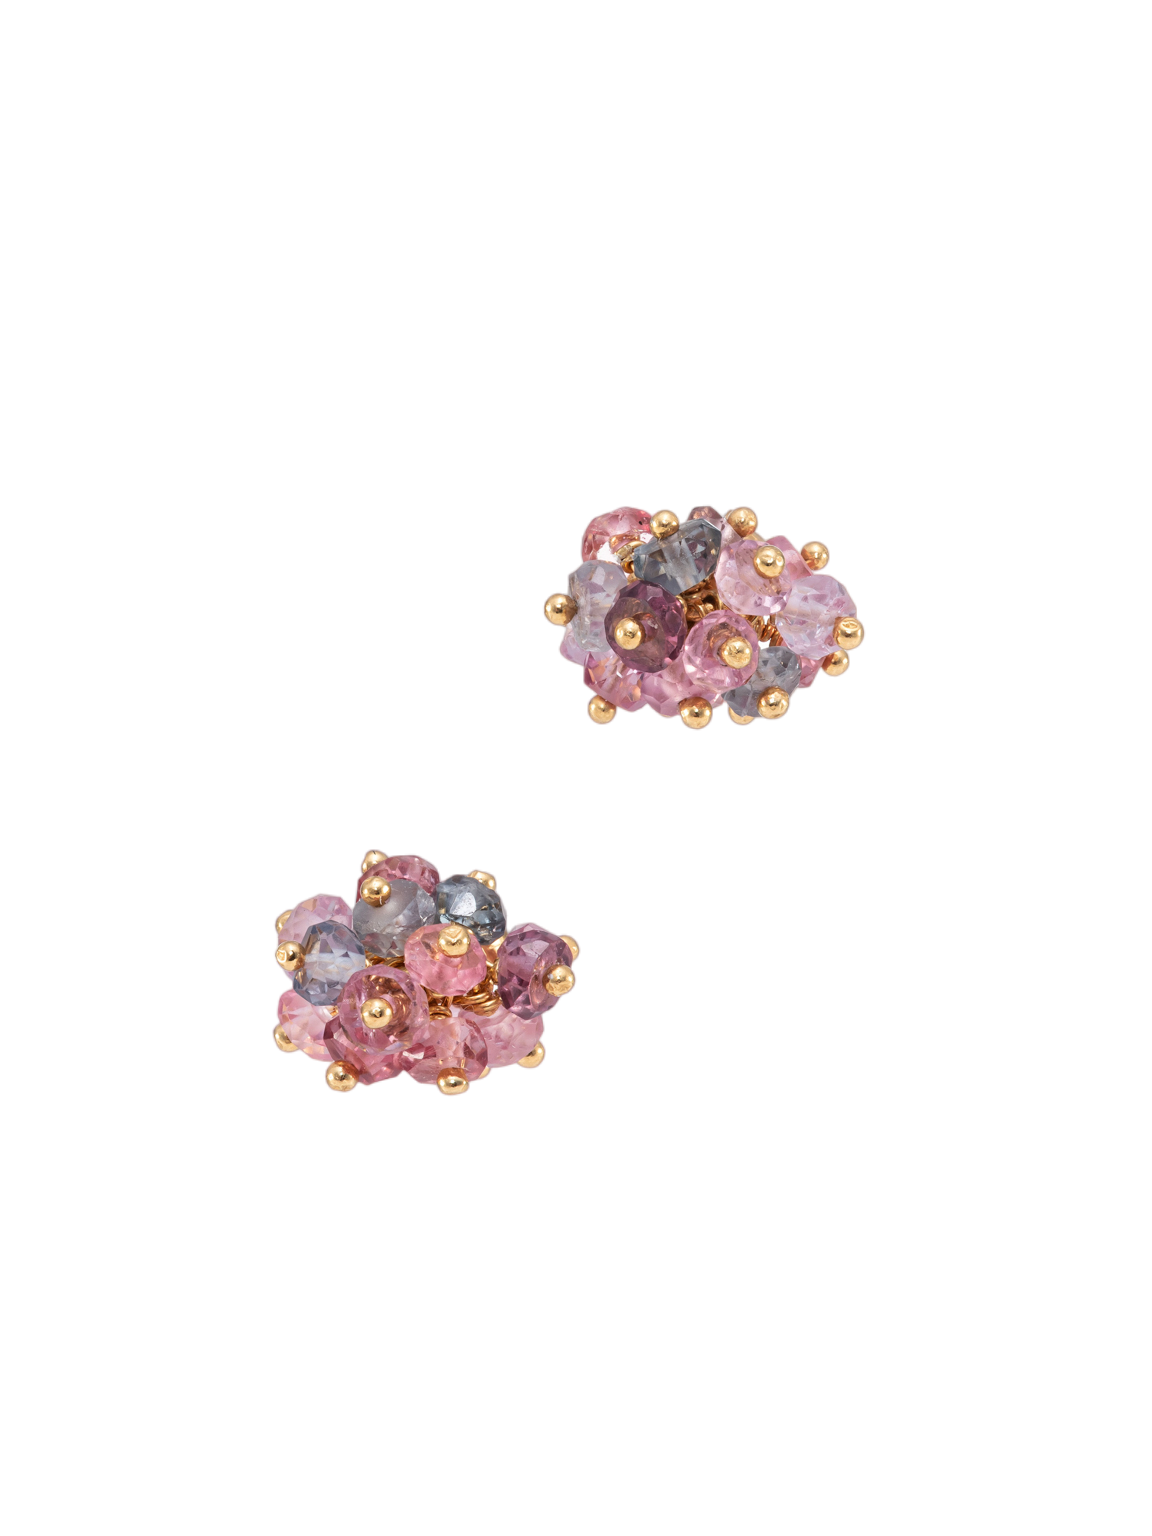 Pompom spinel pastel gemstone earrings